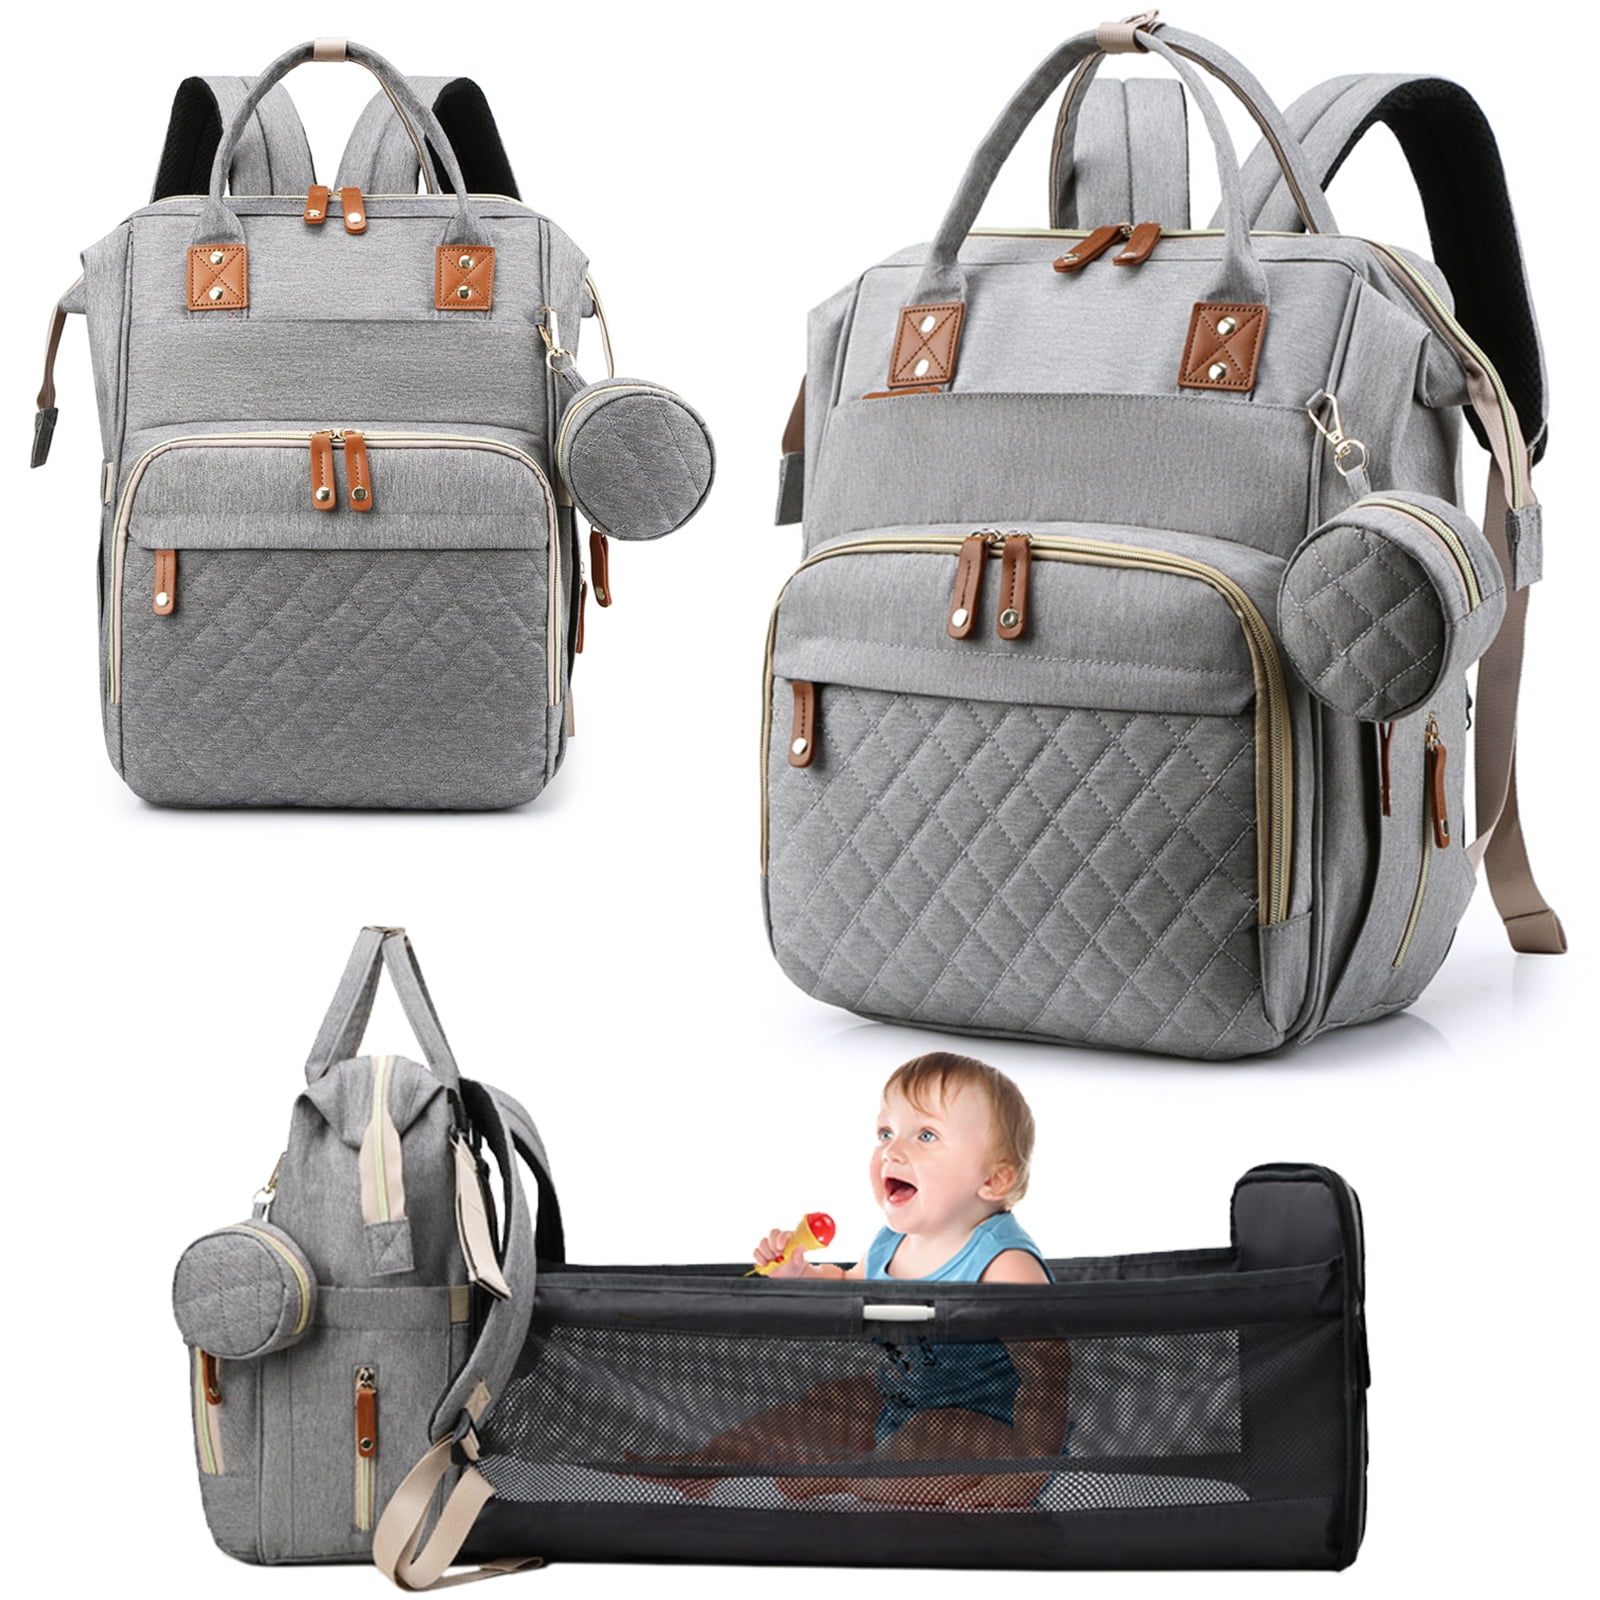 IsEasy Diaper Bag Backpack, Multifunction Travel Back Pack Maternity ...